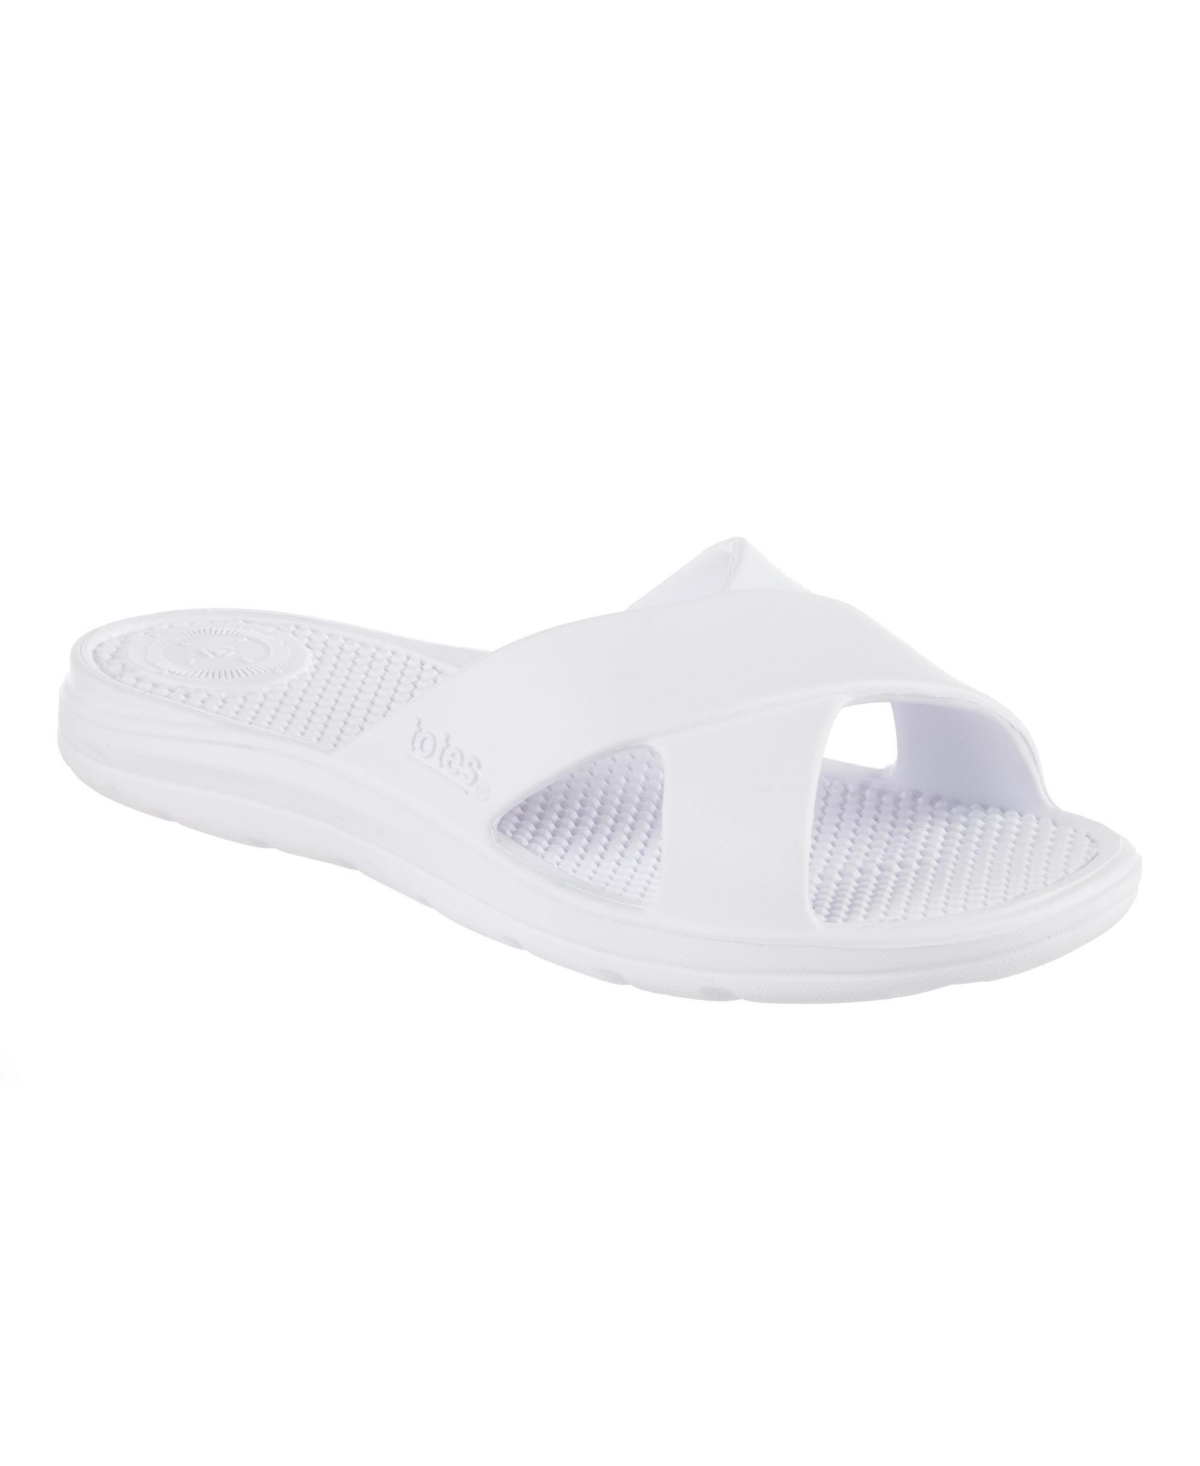 Women's Molded Cross Slide Sandals with Everywear - White